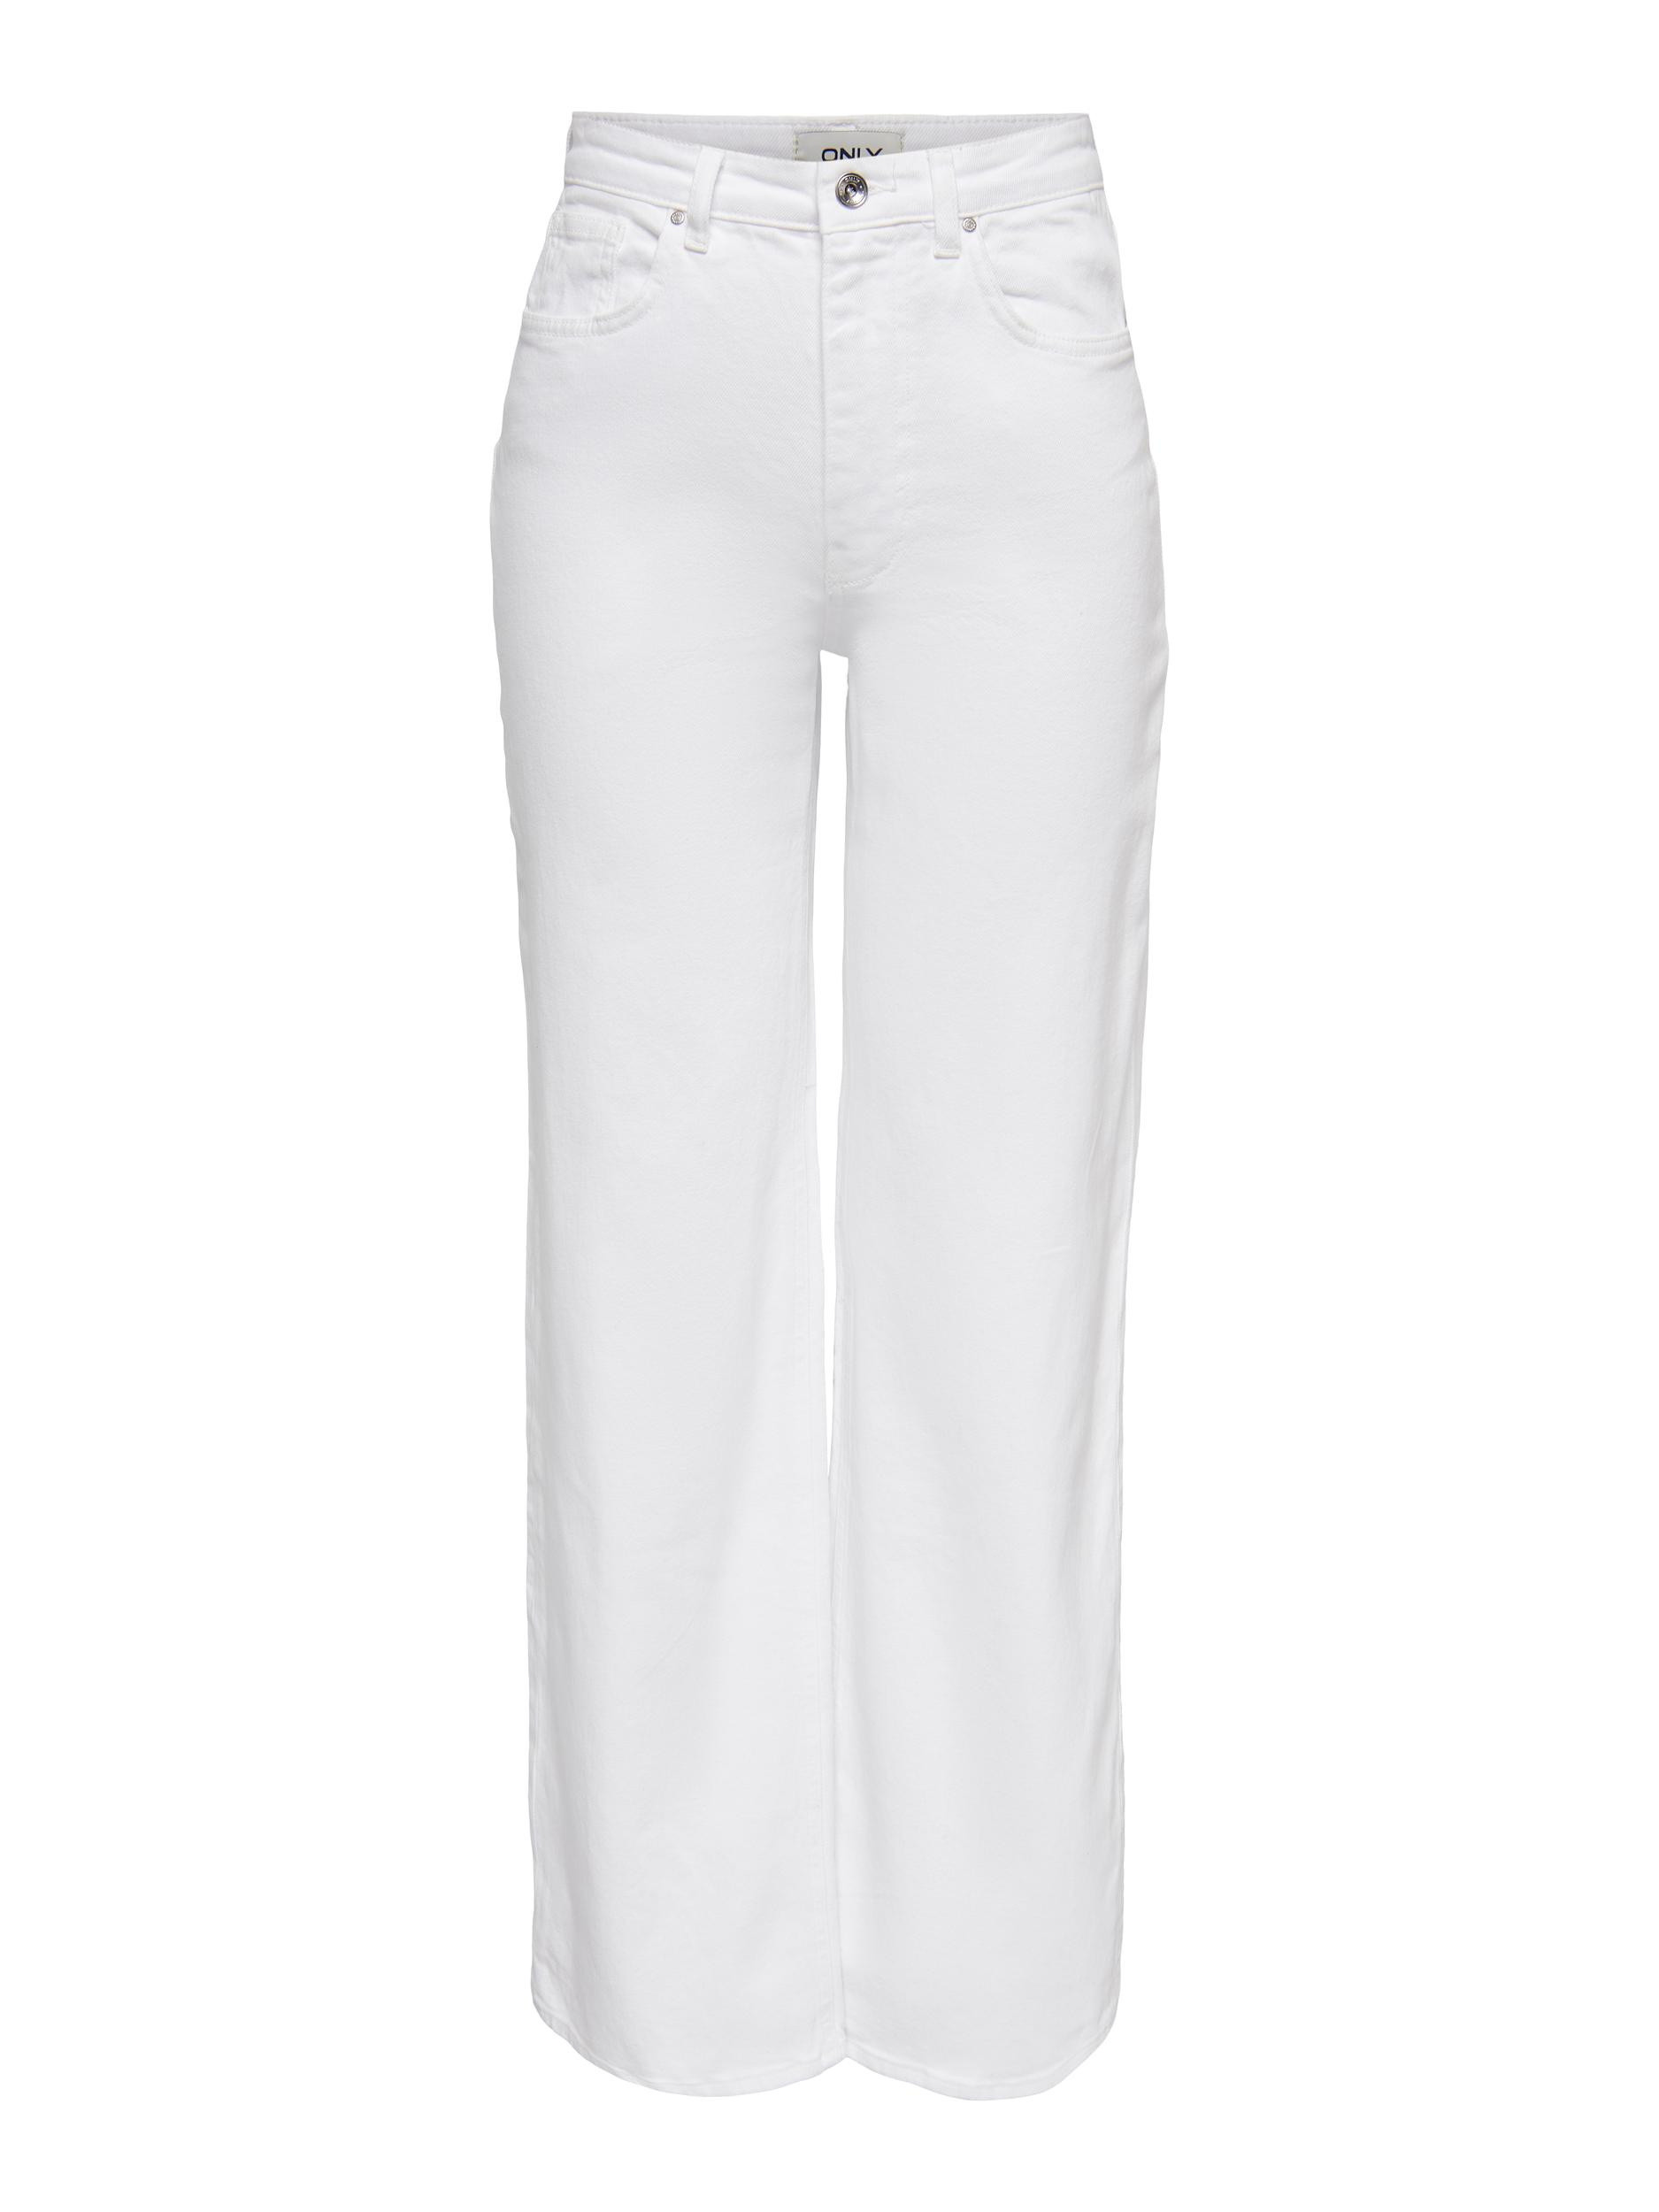 Only - Five pocket jeans, White, large image number 0